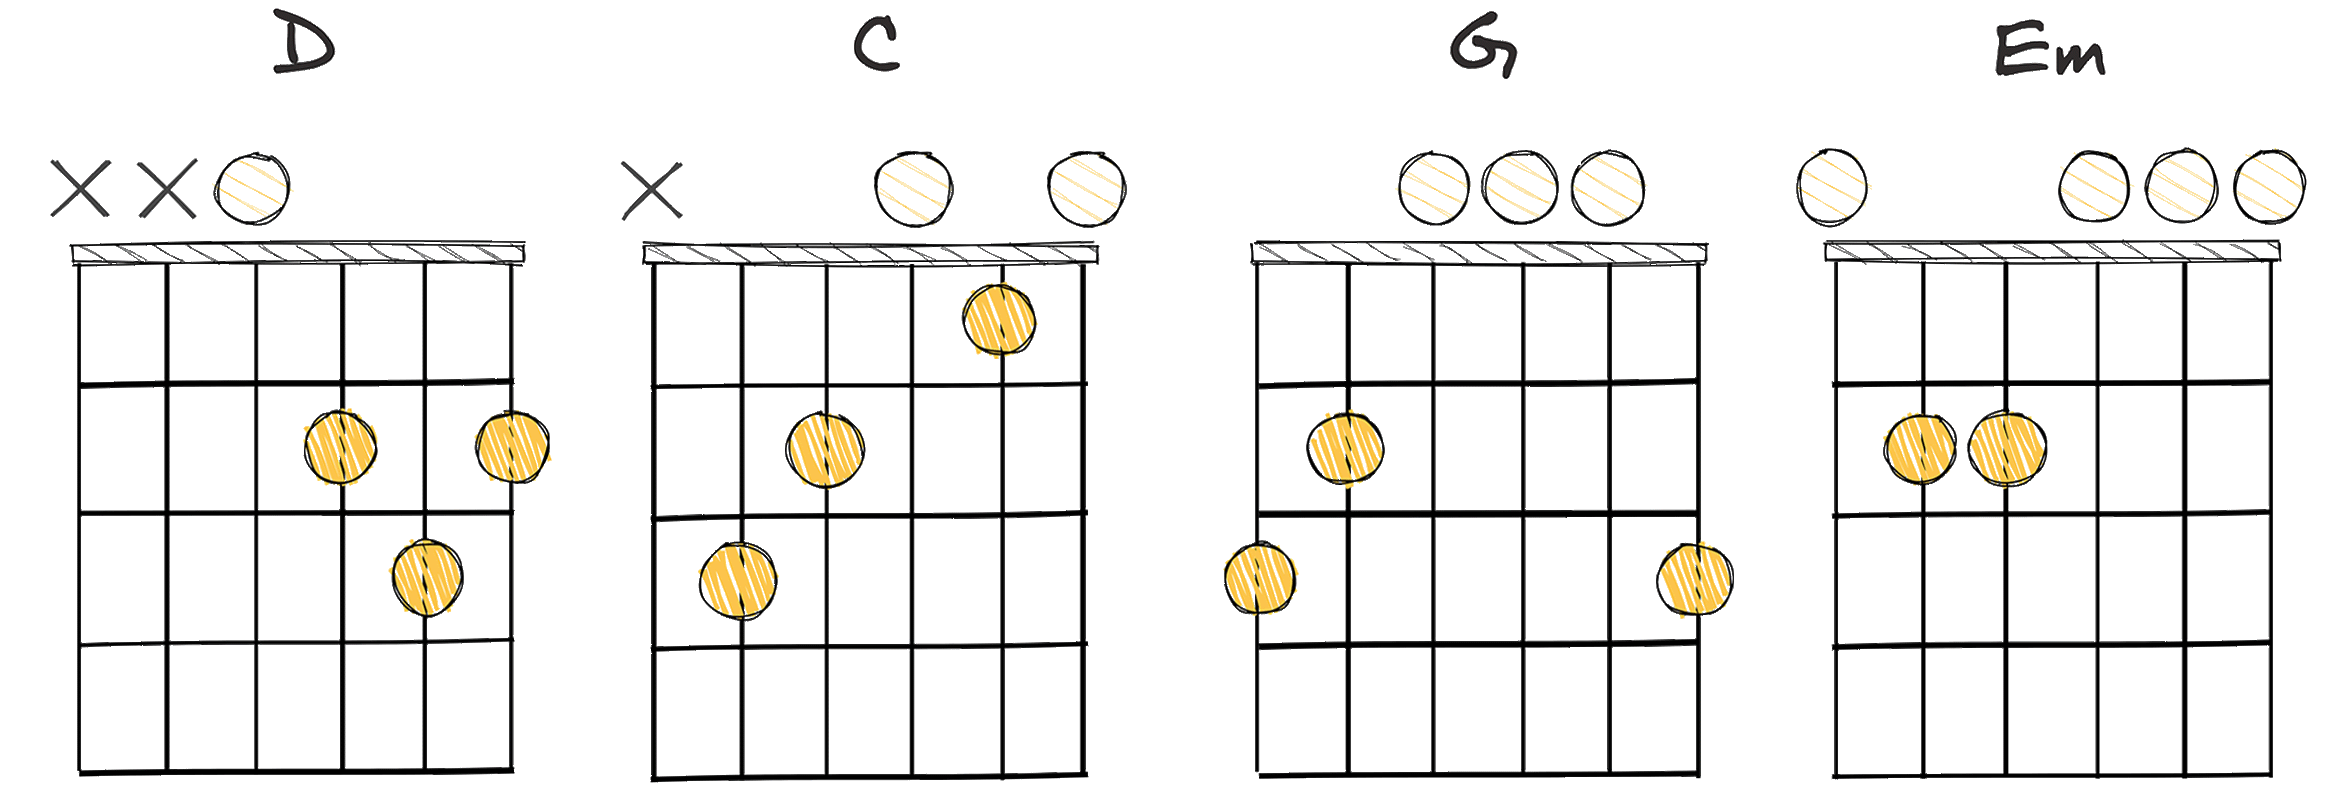 V - IV - I - vi (5 - 4 - 1 - 6) chords diagram